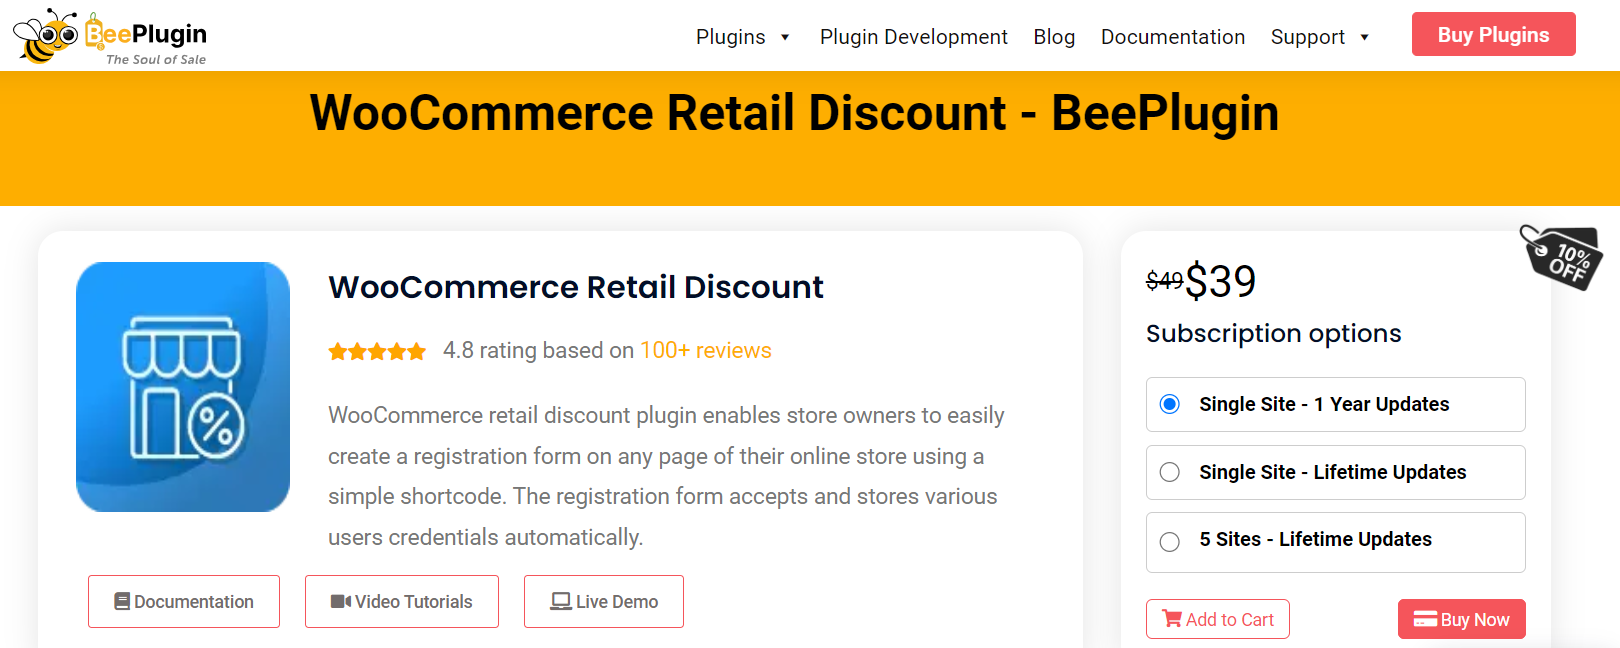 WooCommerce Retail Discount Plugin